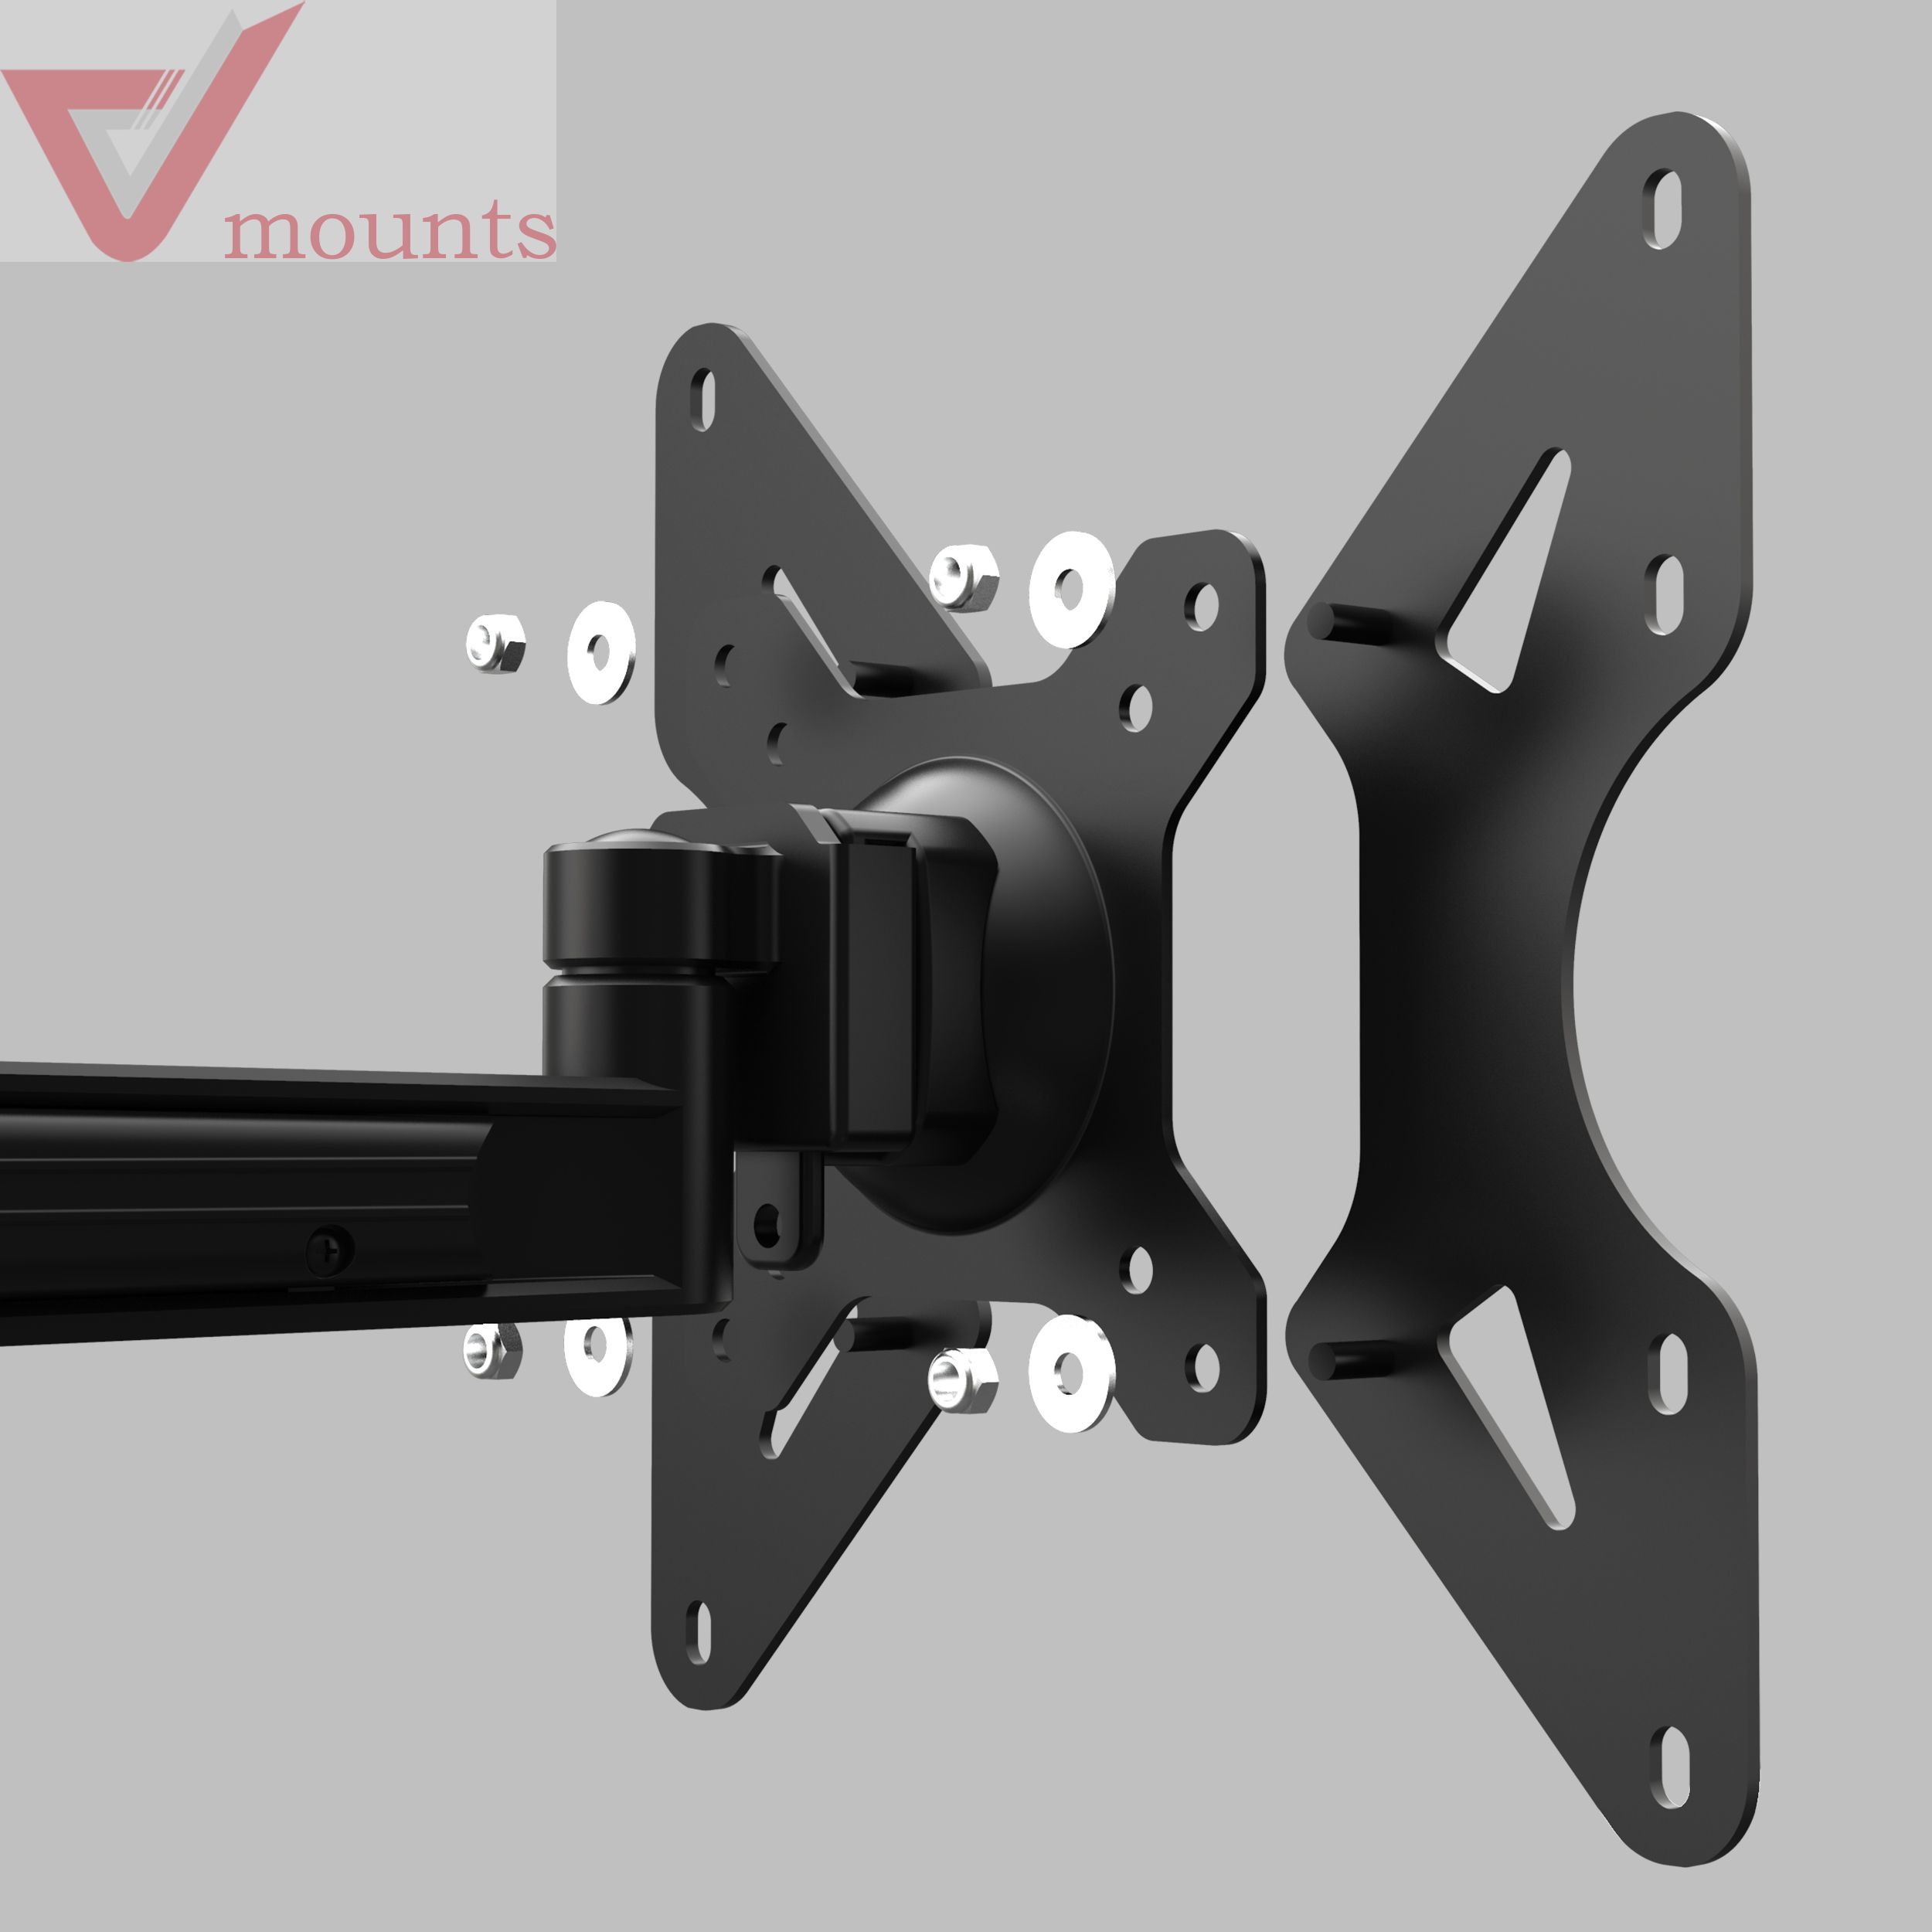 V-mounts TV Mount Accessories VM-A05